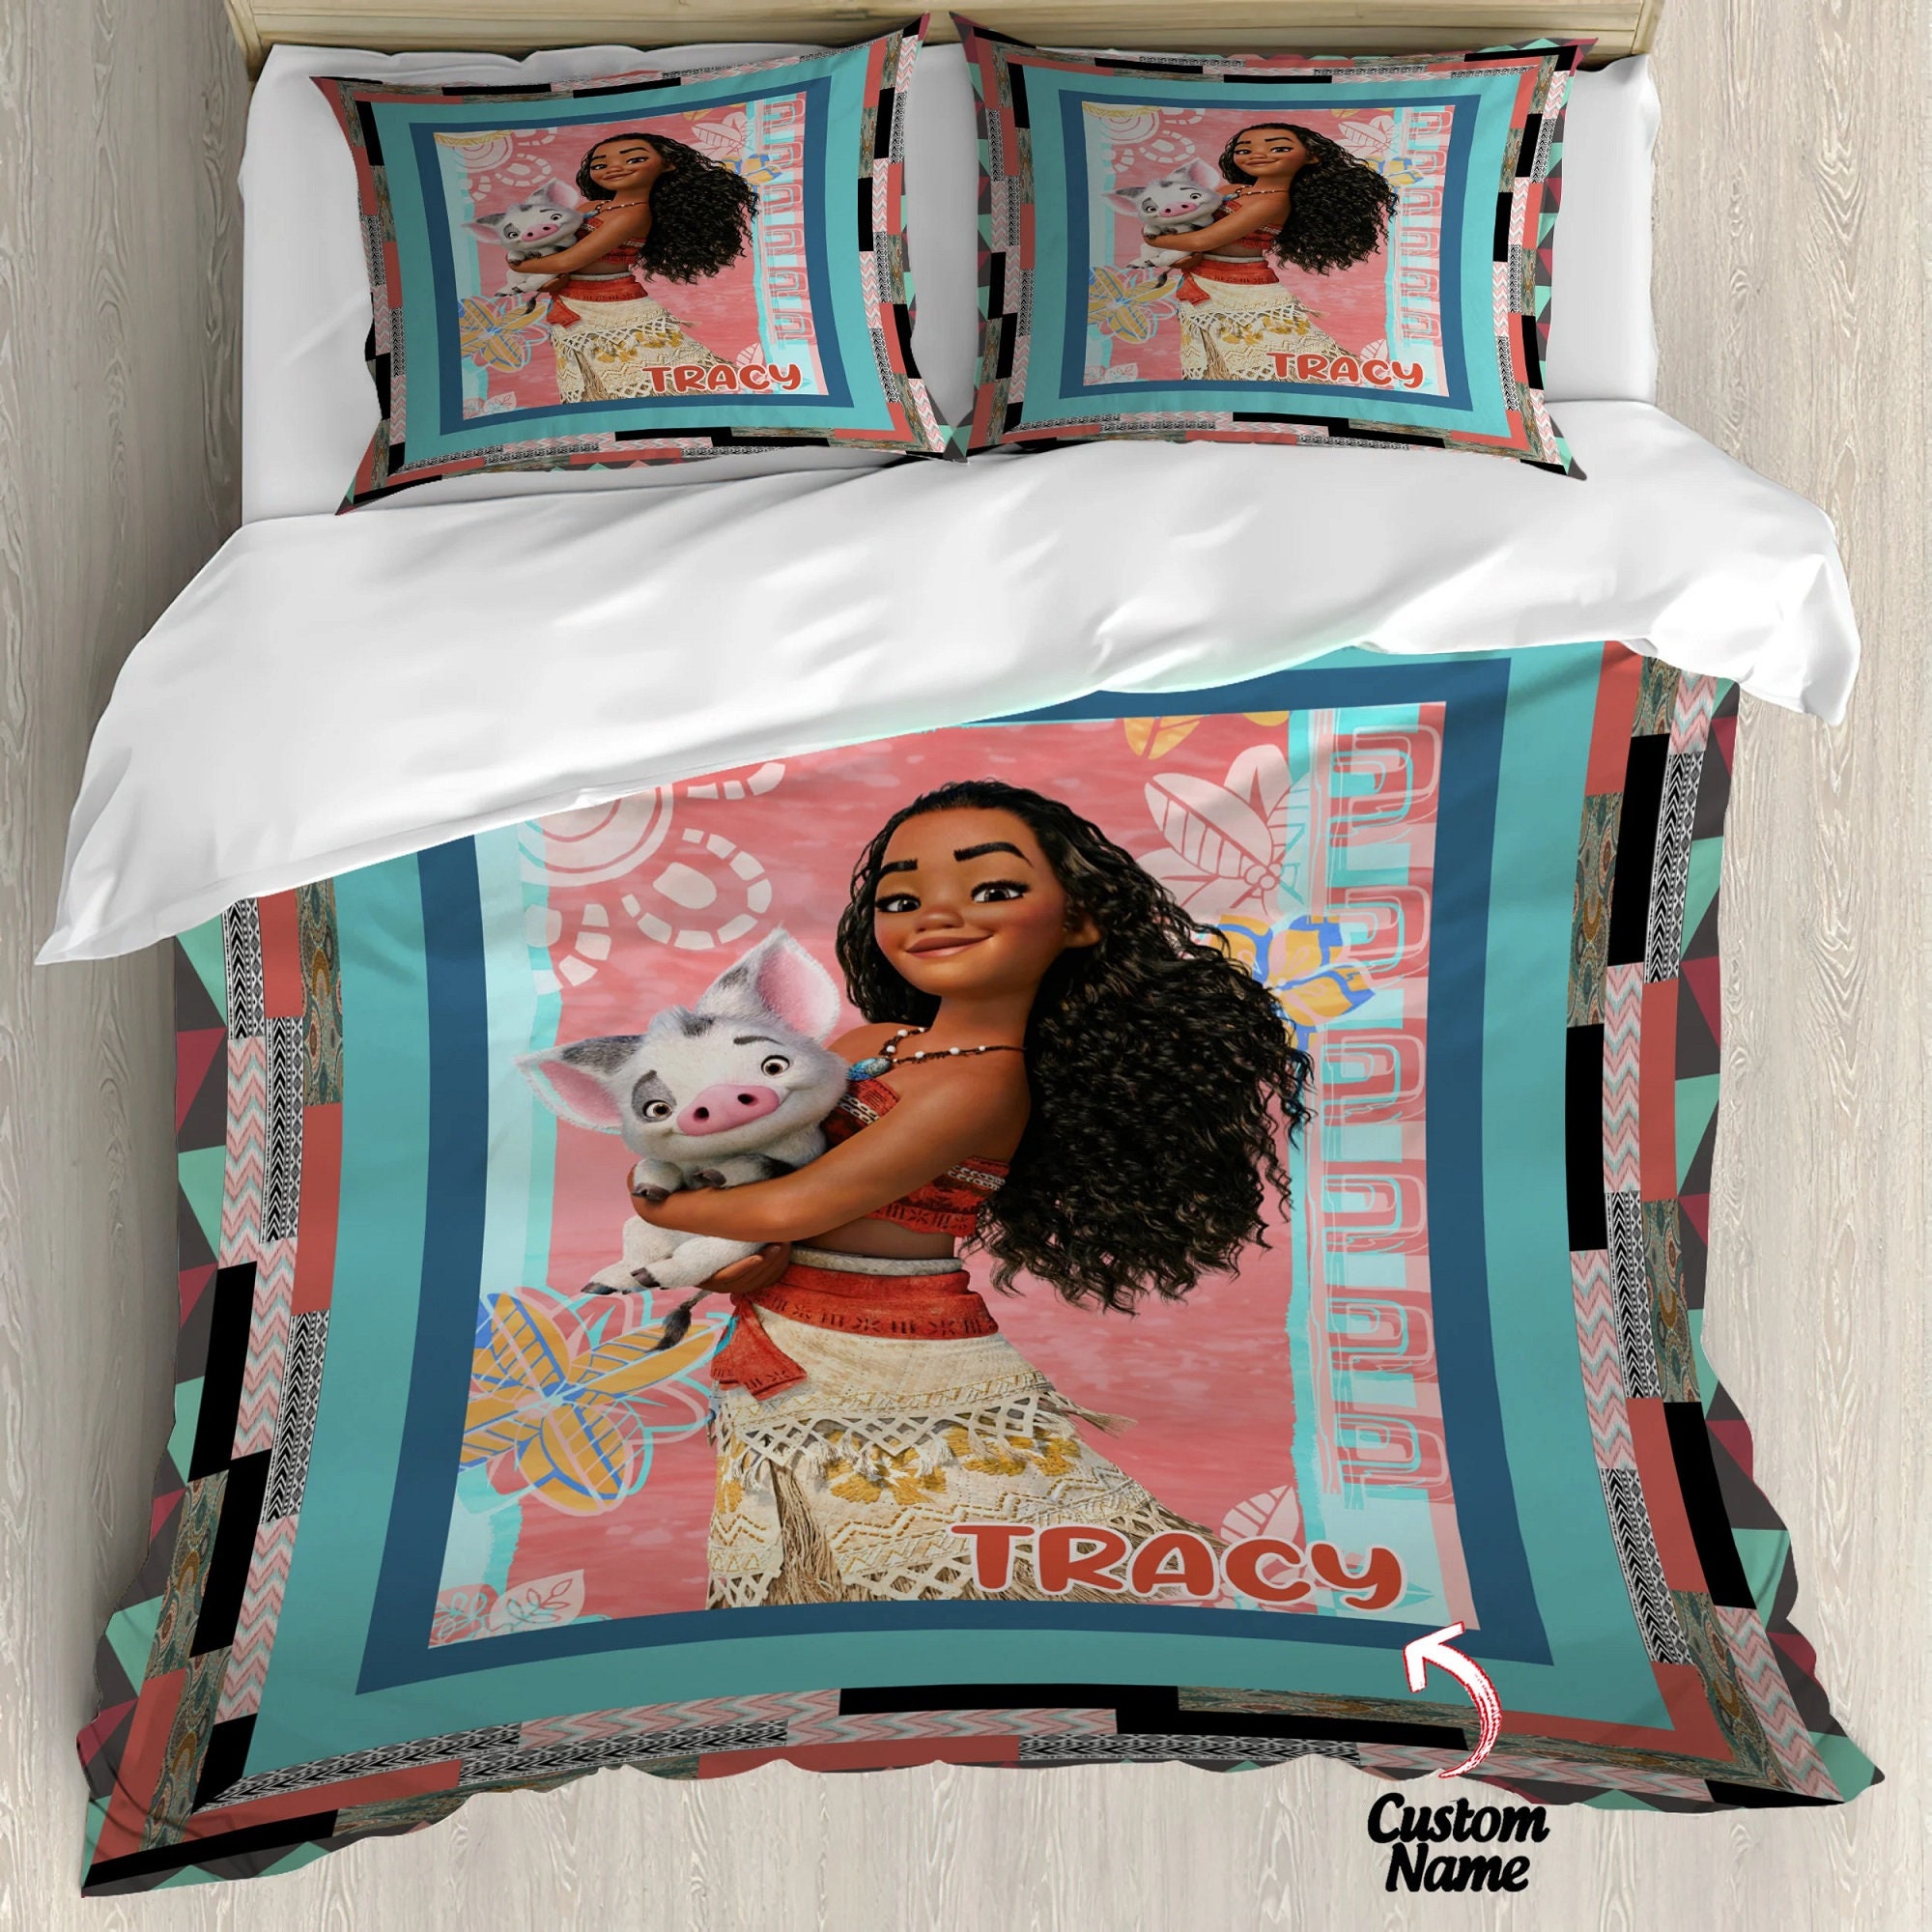 Moana Princess Bedding set | Personalization Bedding set